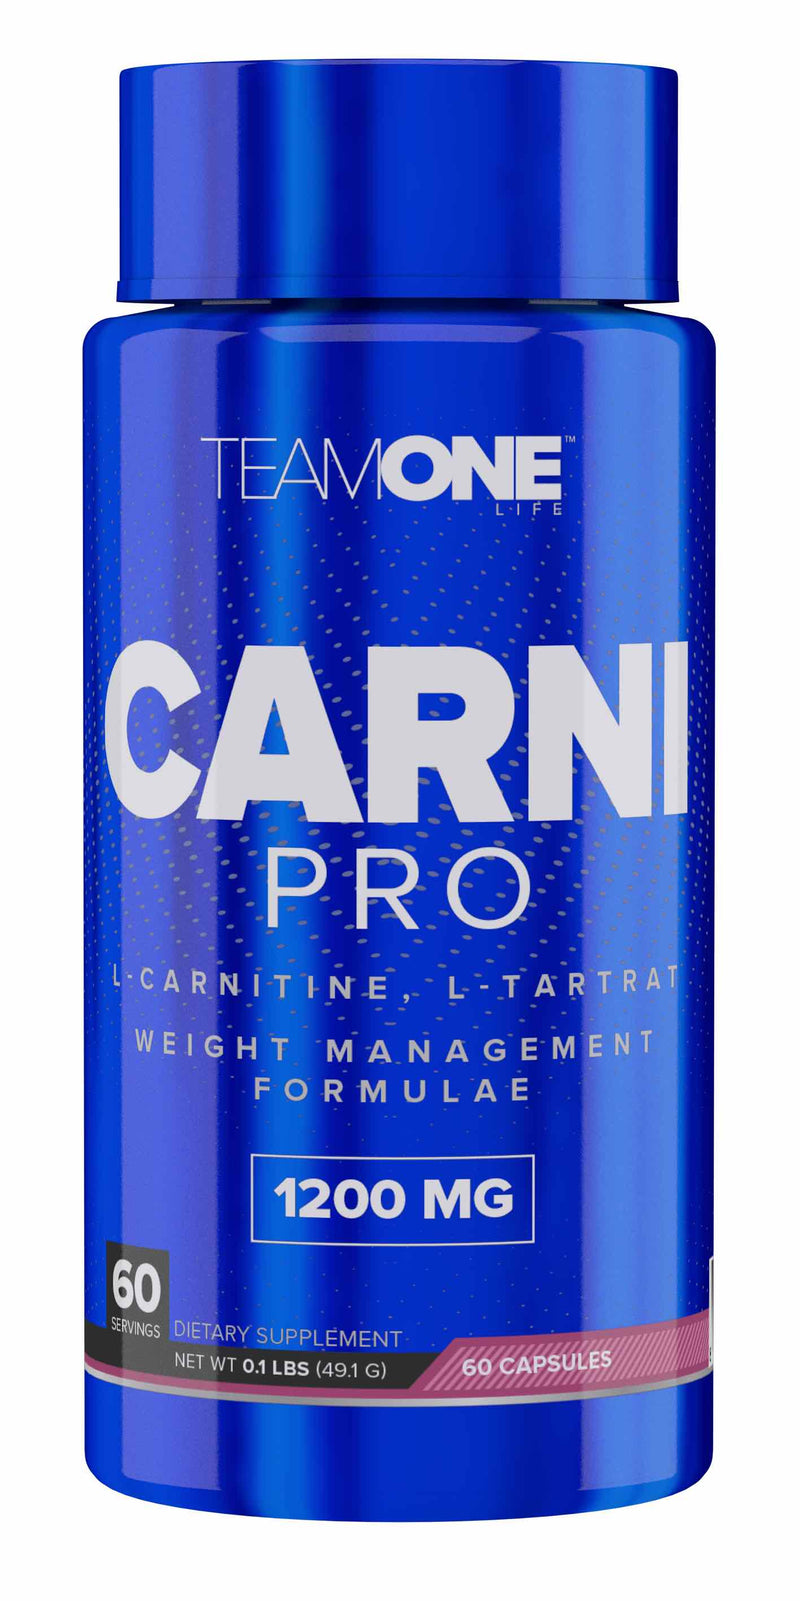 Team One life - Carni pro